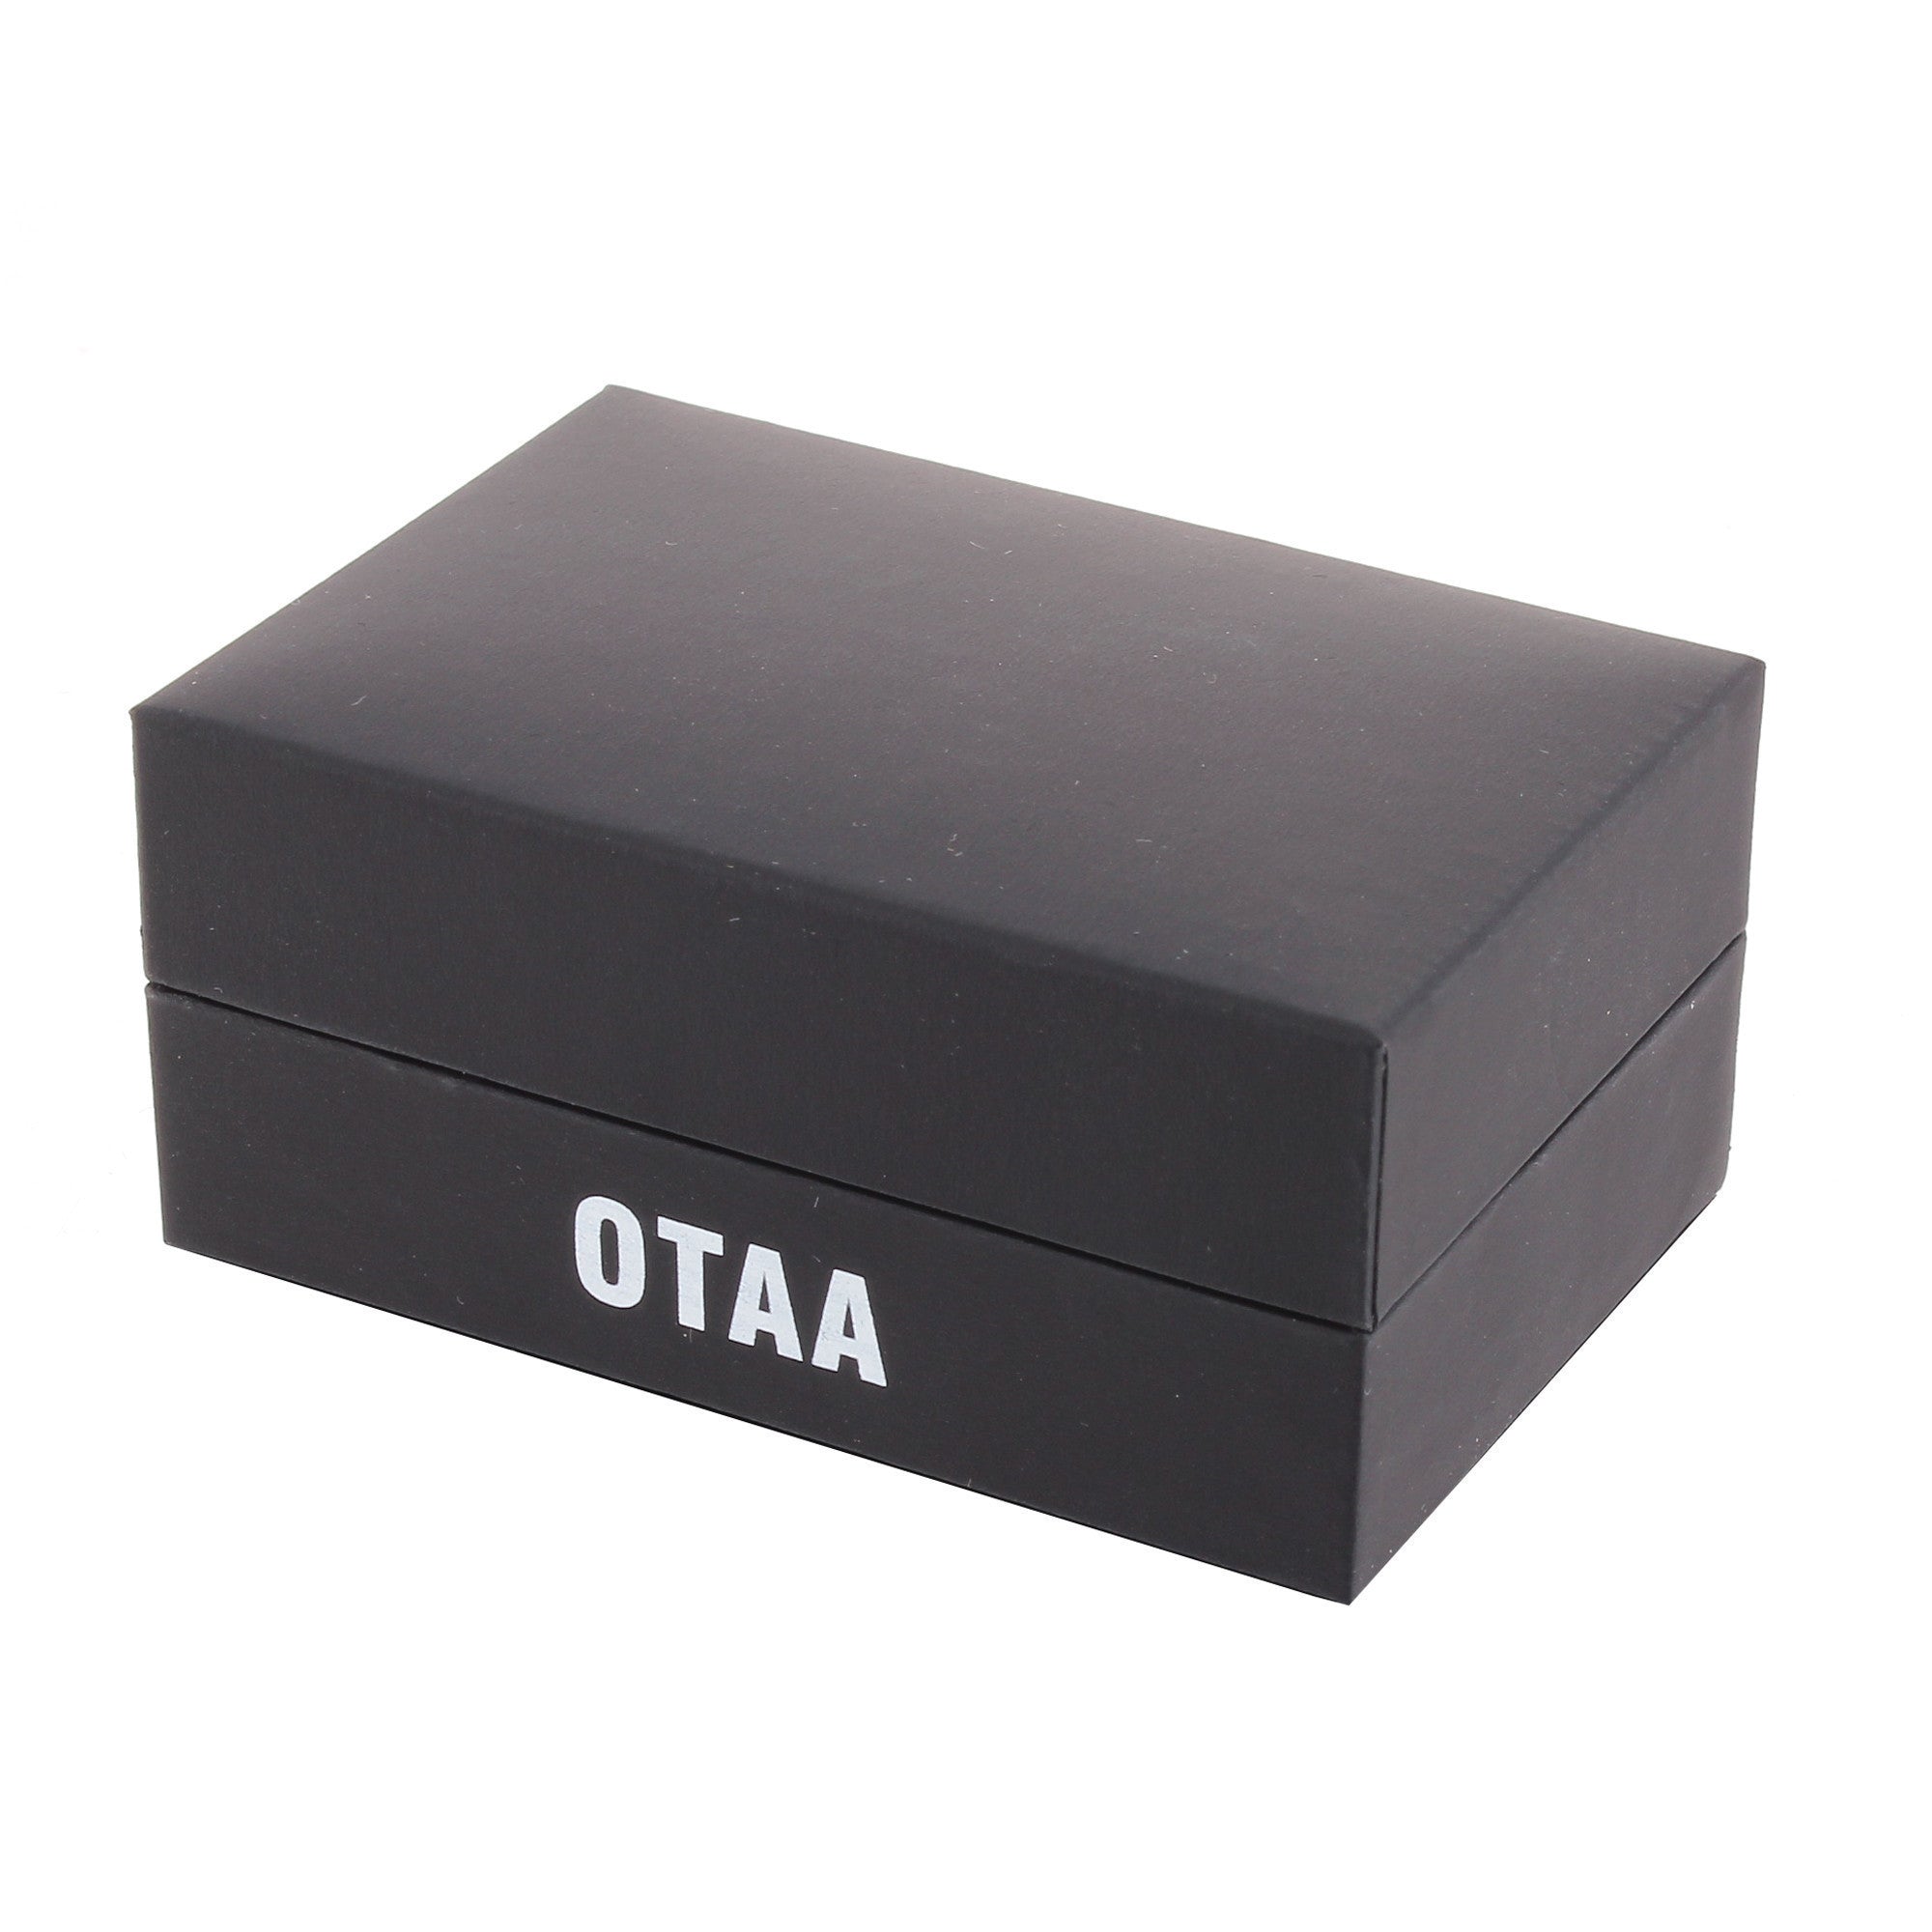 OTAA Cufflinks Box